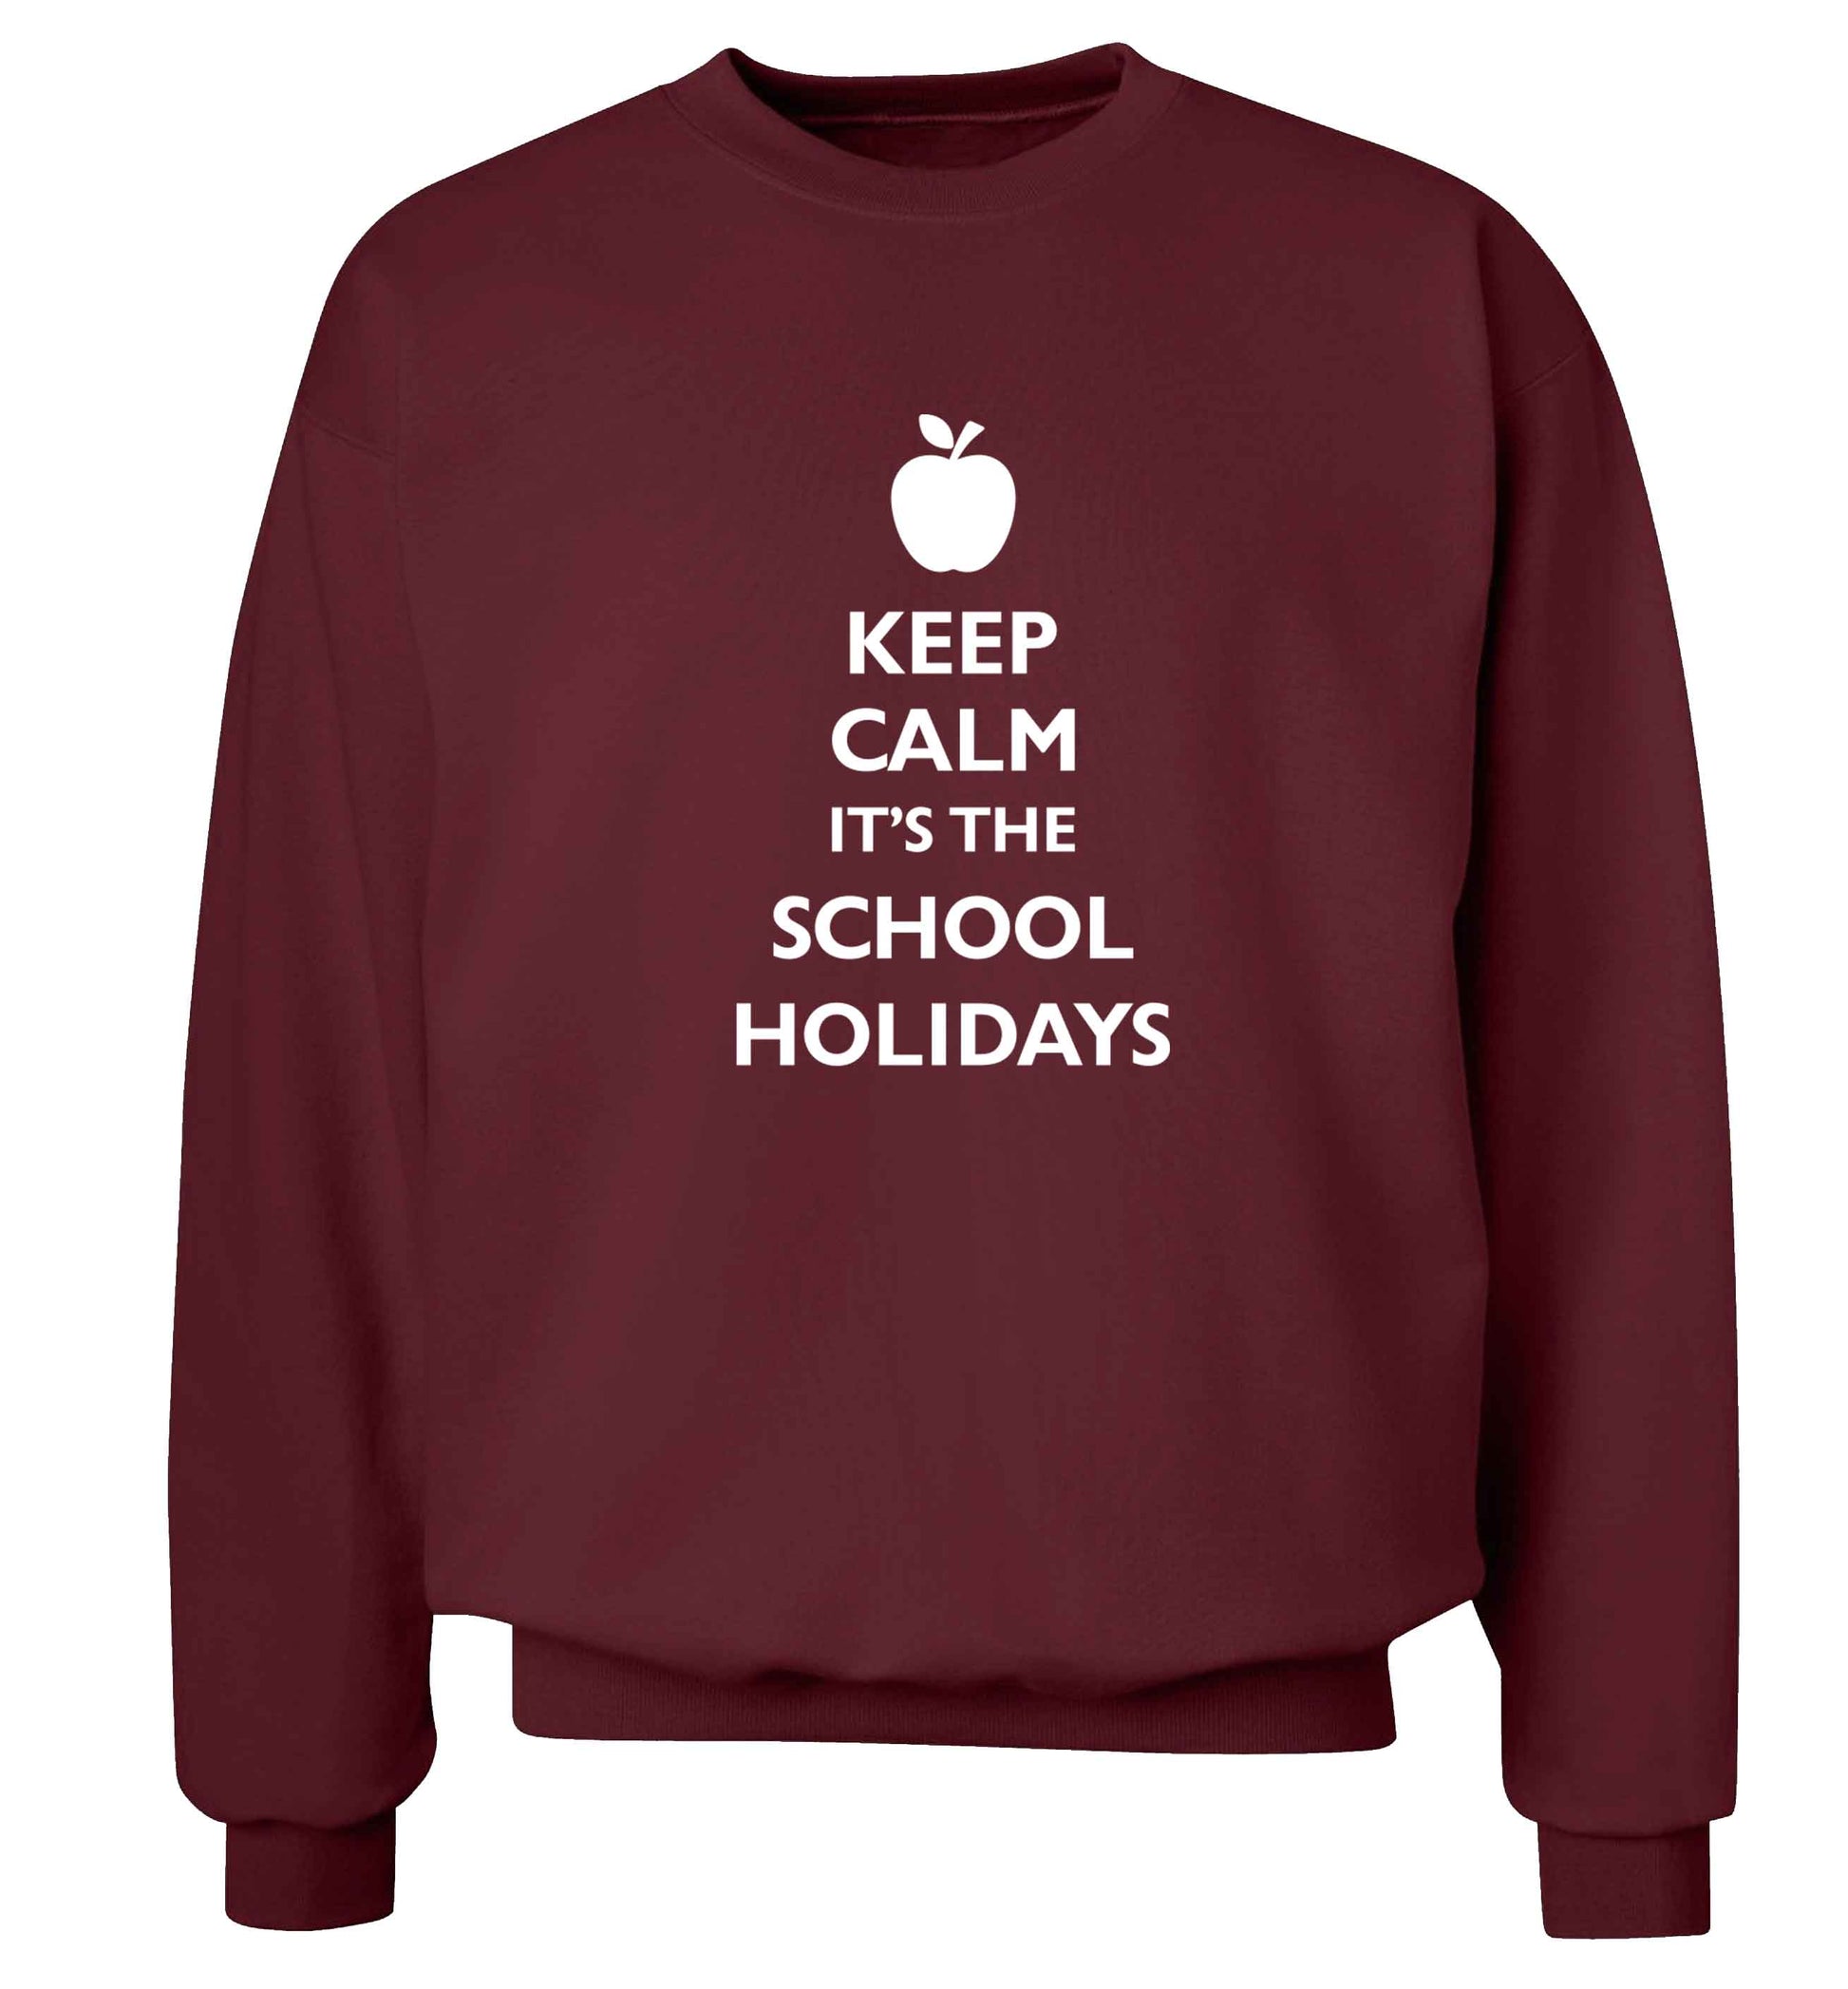 Keep calm it's the school holidays adult's unisex maroon sweater 2XL